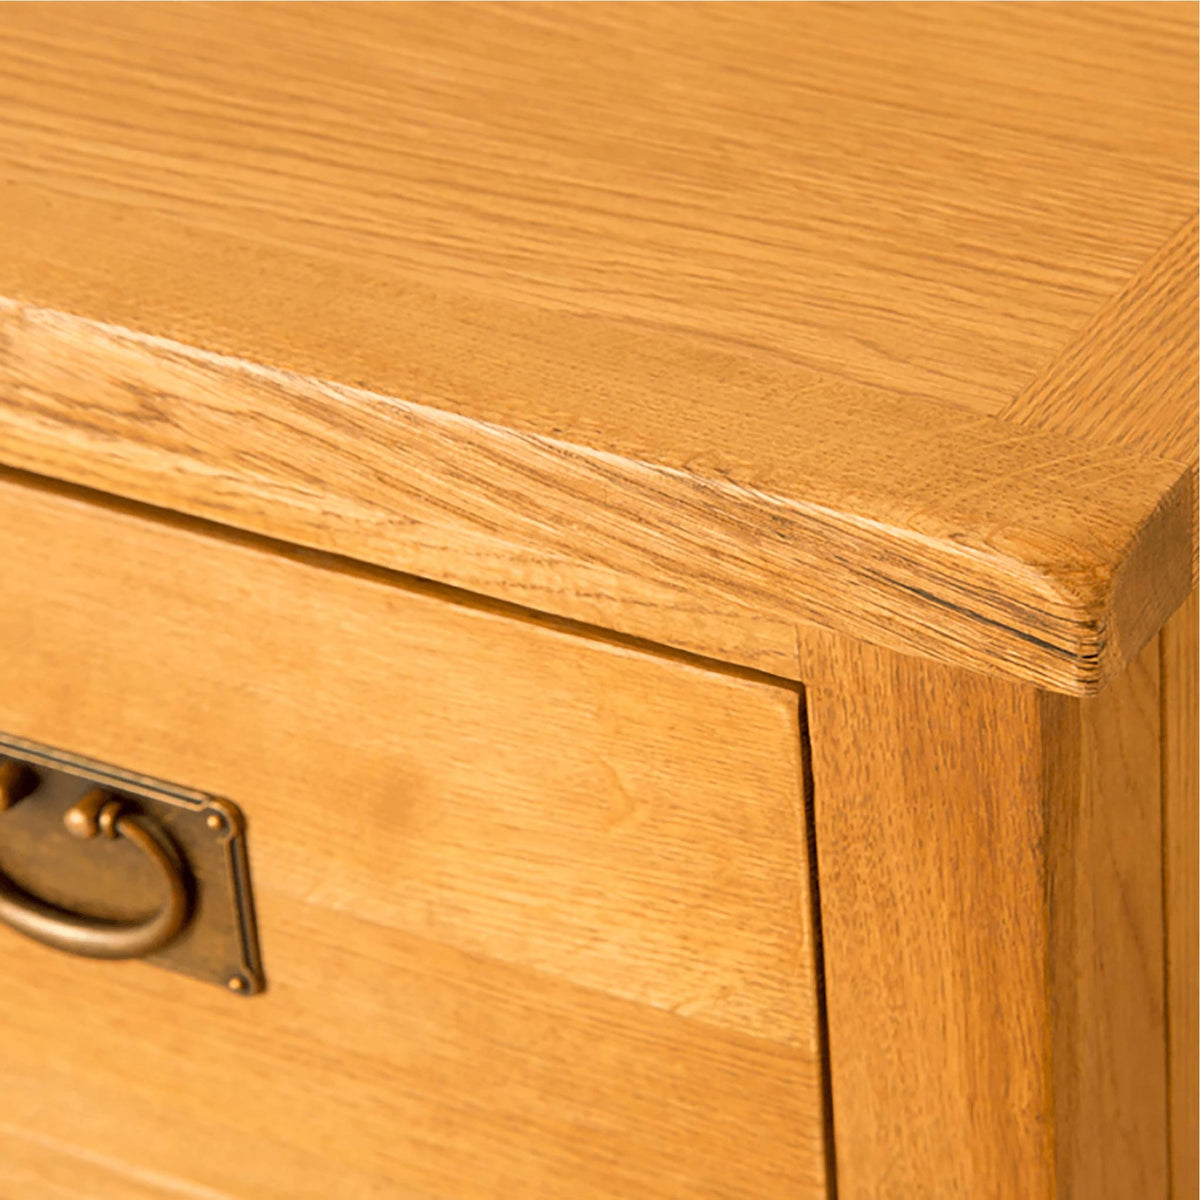 Lanner Oak Small Sideboard top corner drawer view